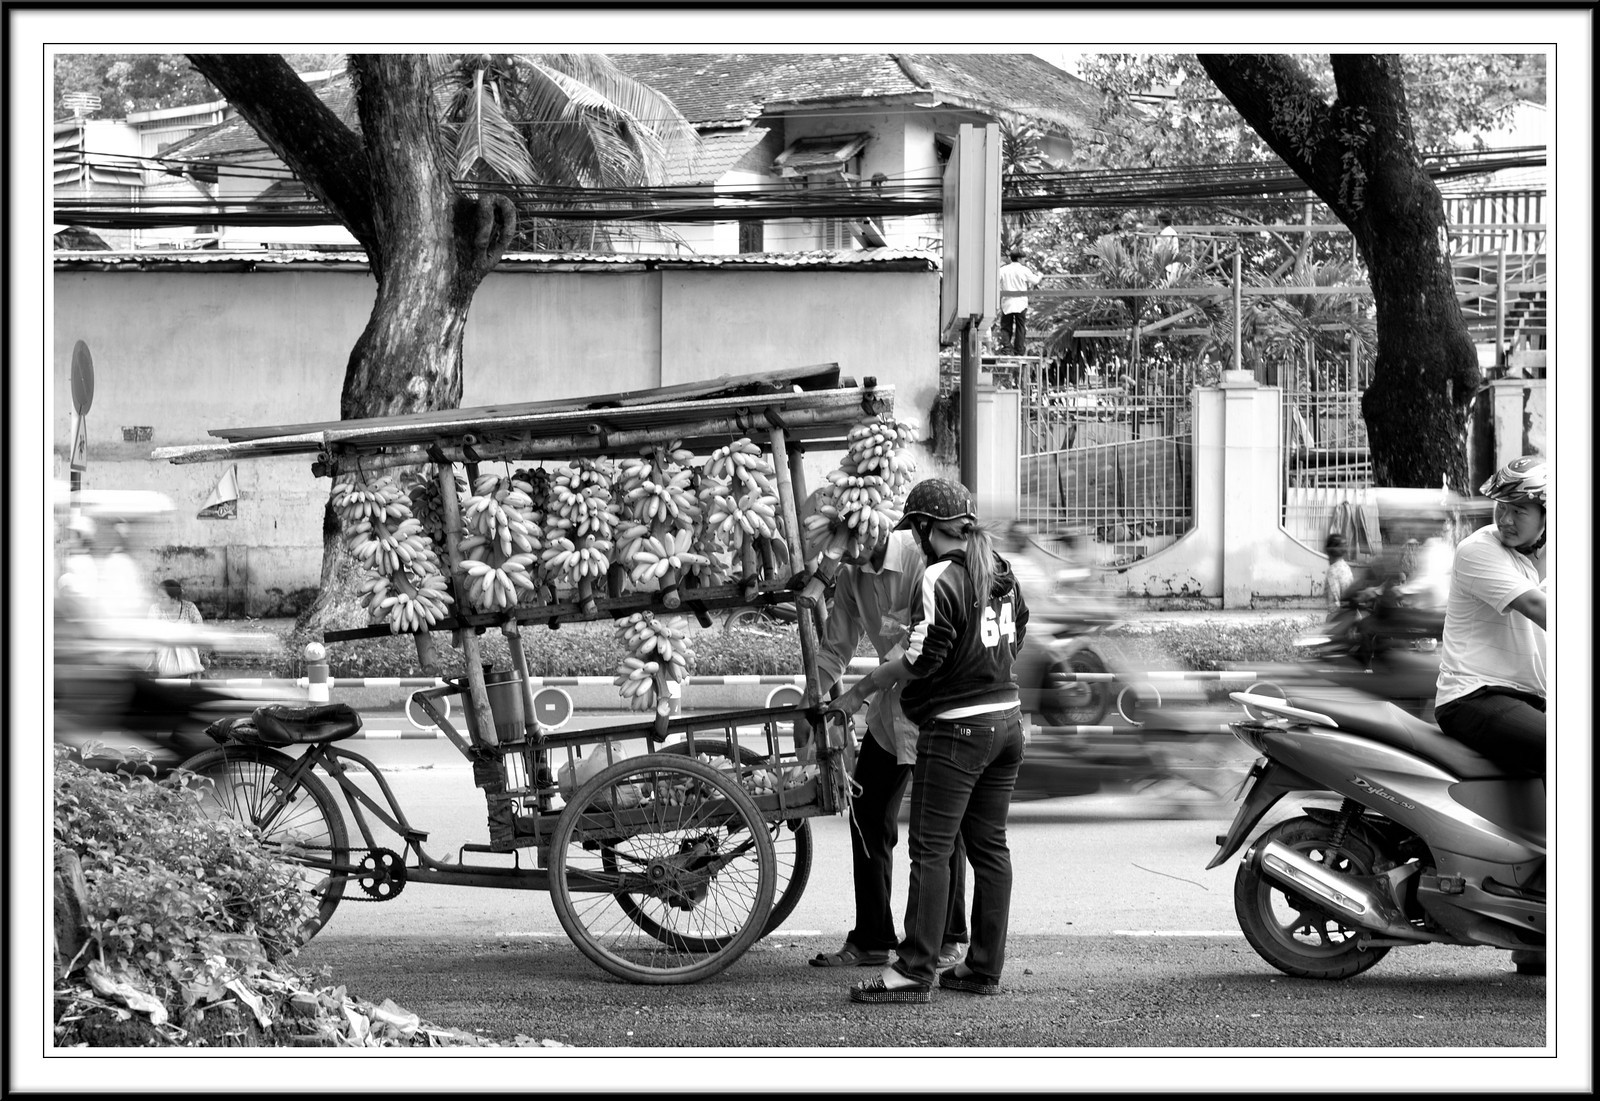      

 
  Street vendor in Saigon Vietnam
 






















     